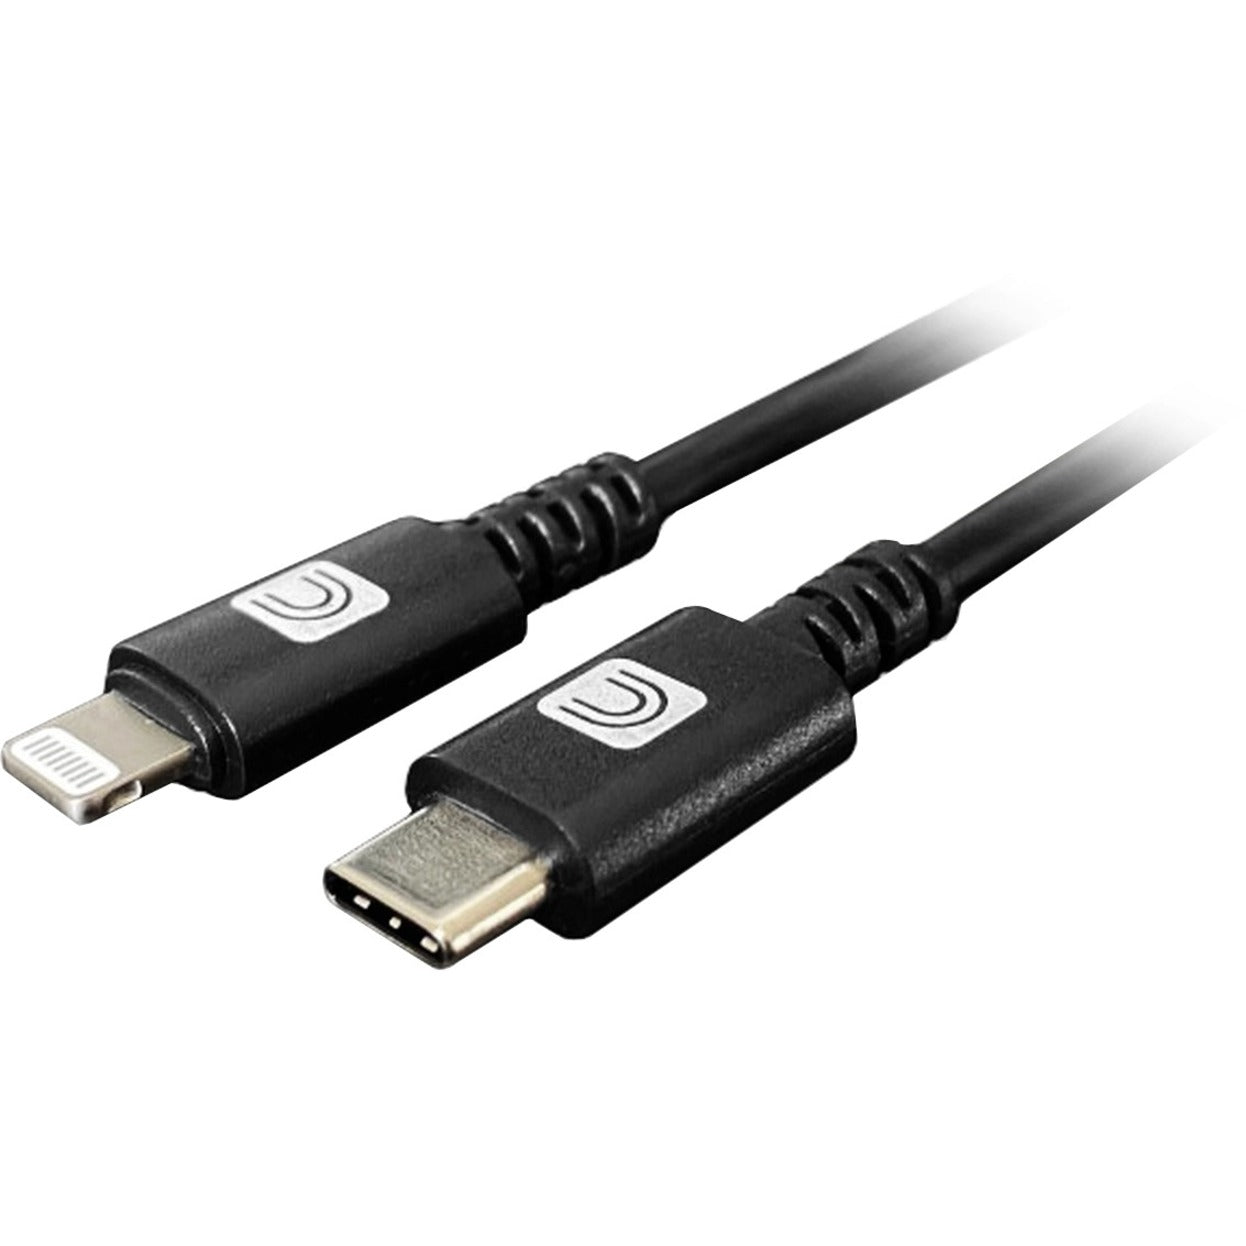 Comprehensive LTNG-USBC-3PROBLK Pro AV/IT Lightning Male to USB-C Male Cable Black 3ft, Lifetime Warranty, MFI Certified, Fast Data Transfer